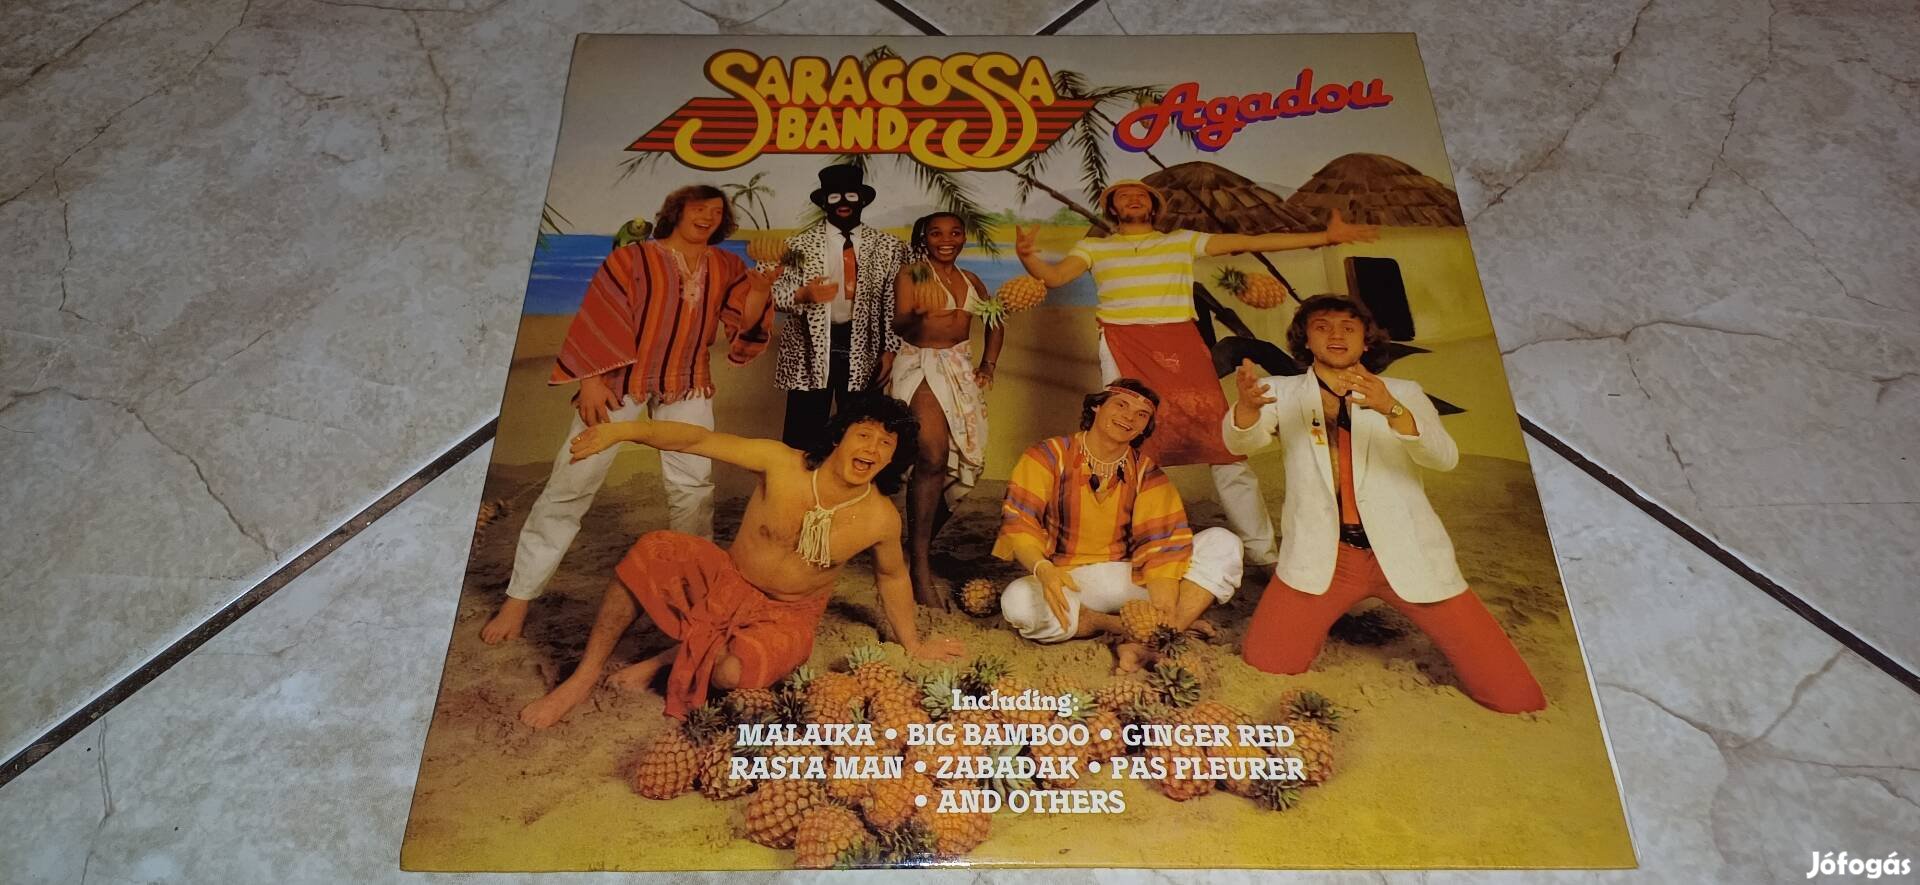 Saragossa band bakelit lemez